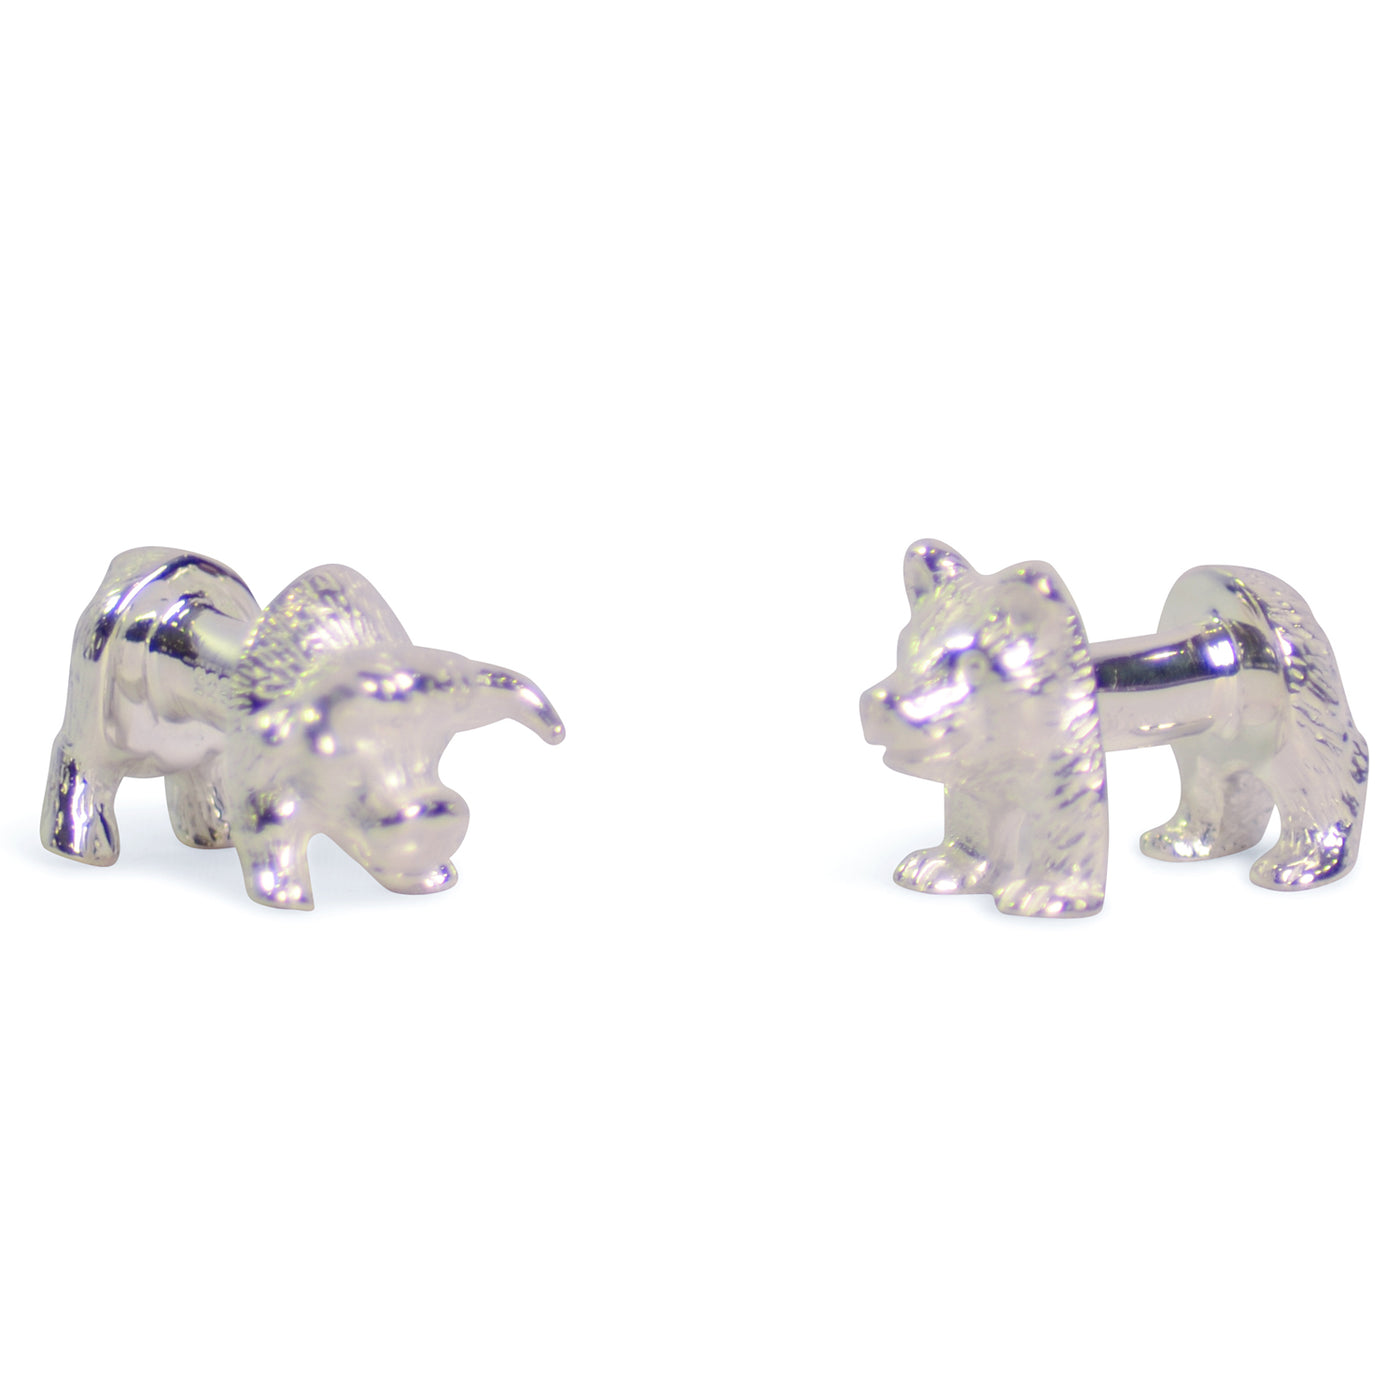 Bear and & Stock Market Sterling Silver Cufflinks | SilverAndGold